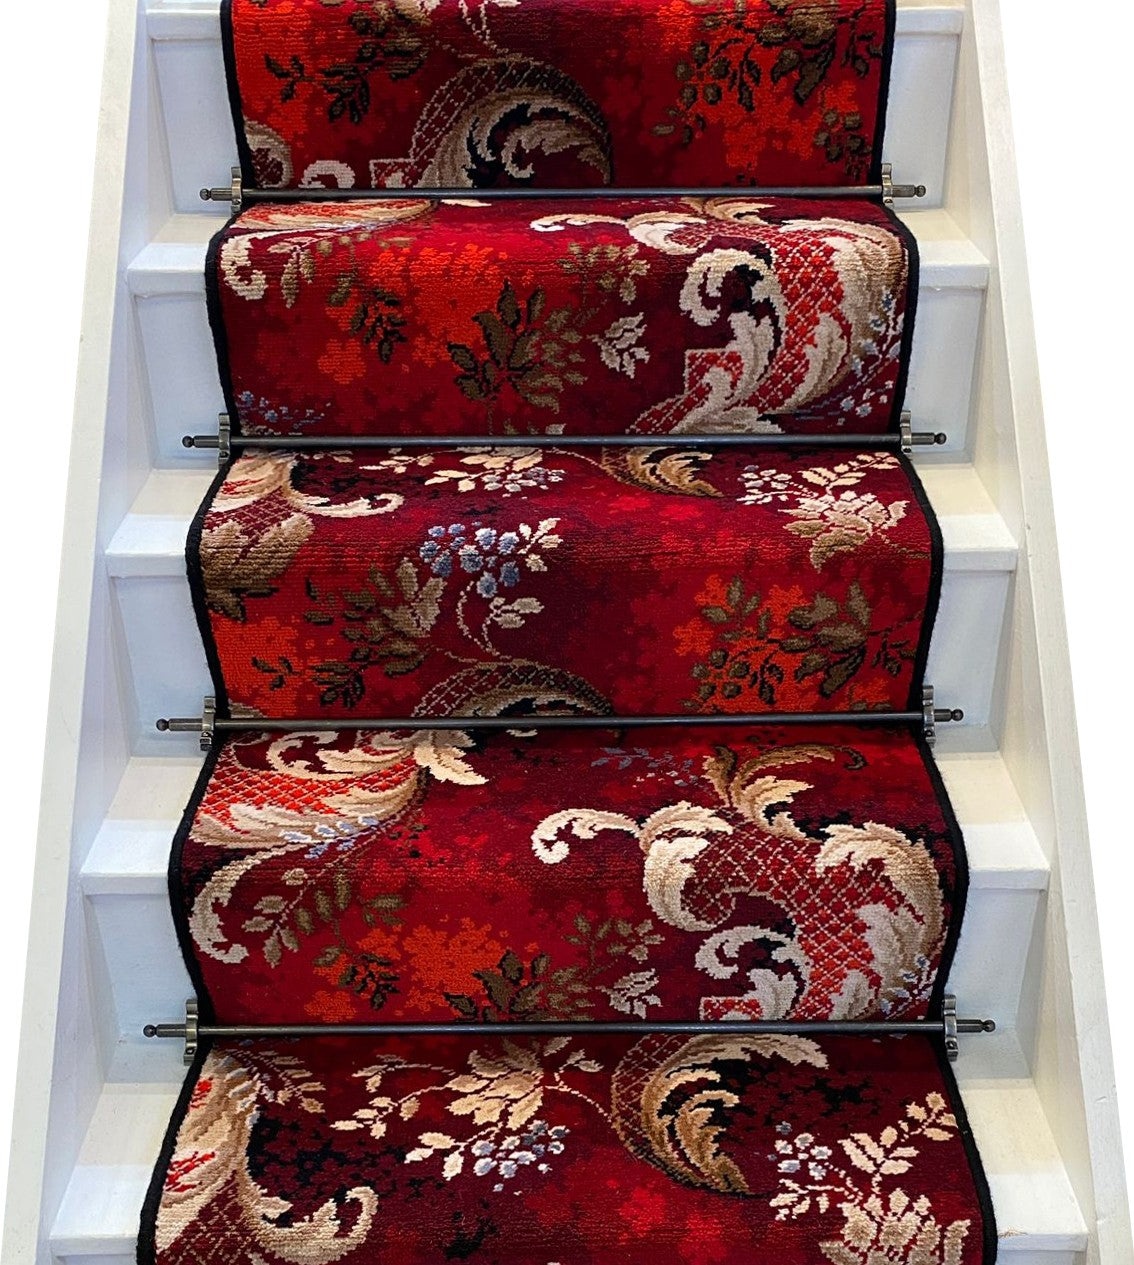 Ulster Carpets Glenavy Firedance Stair Runner with choice of adding bespoke border or overlocking colour (per linear metre)